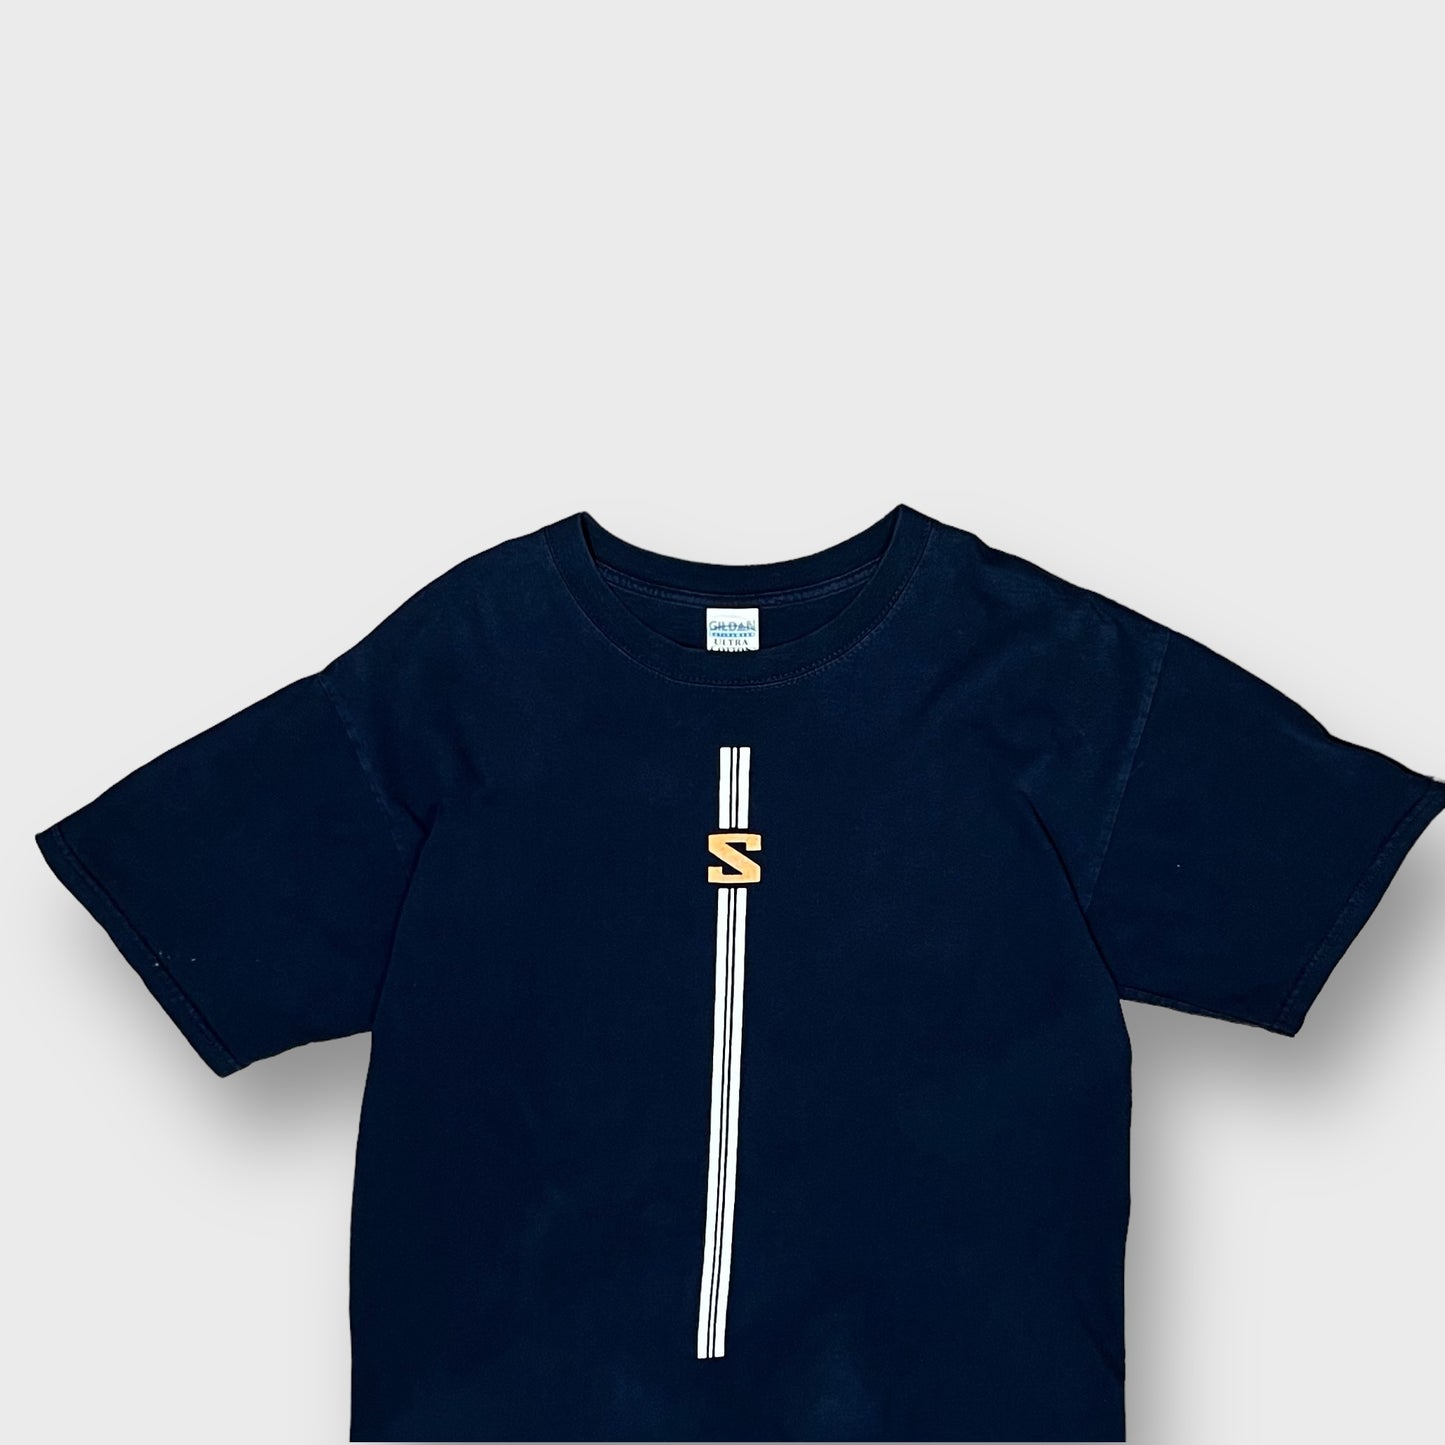 00’s “SALMON”
t-shirt